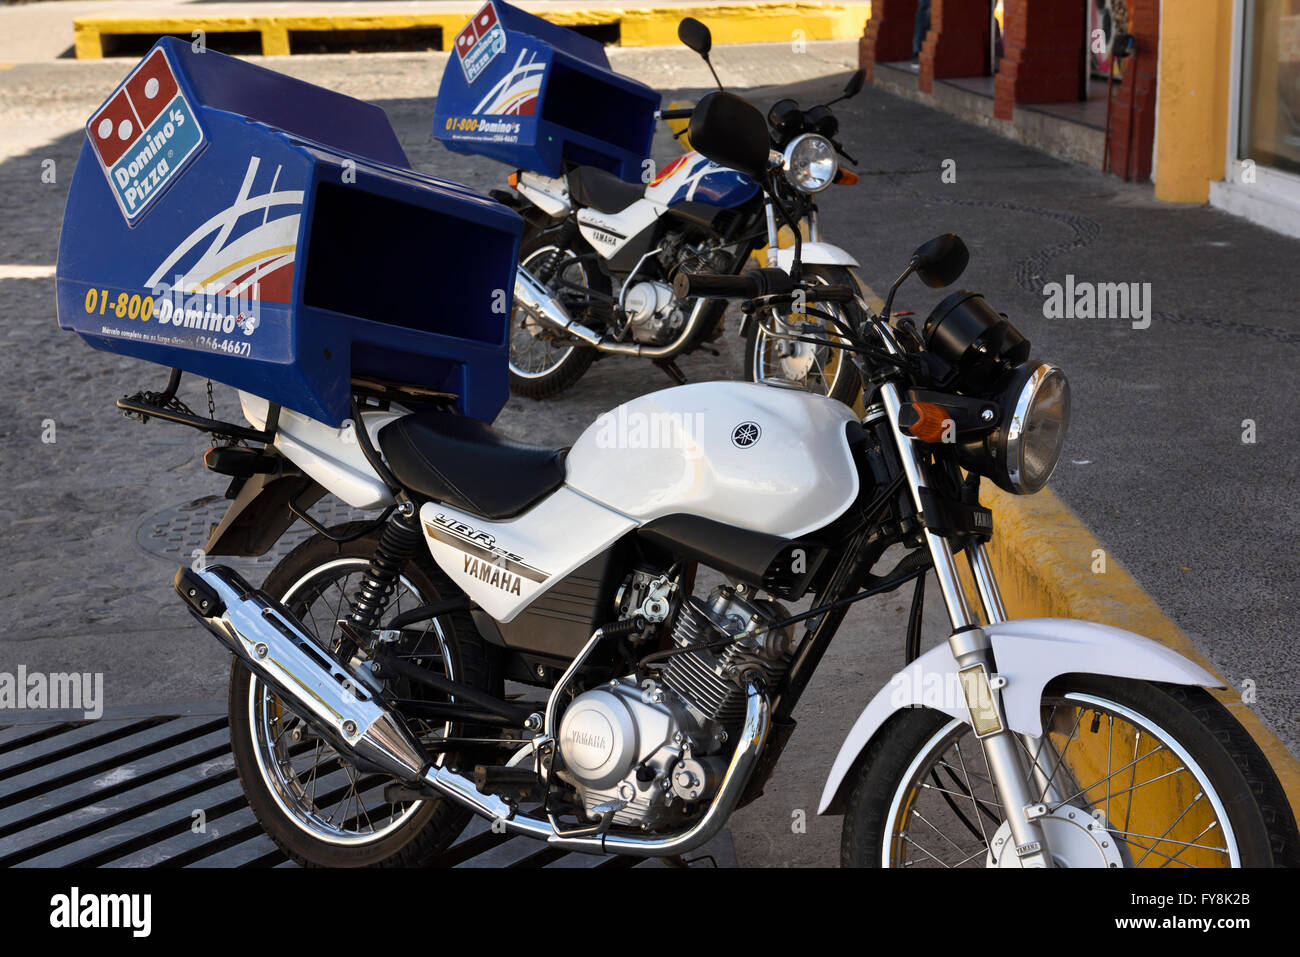 New motorbikes for pizza delivery in Puerto Vallarta Mexico Stock Photo